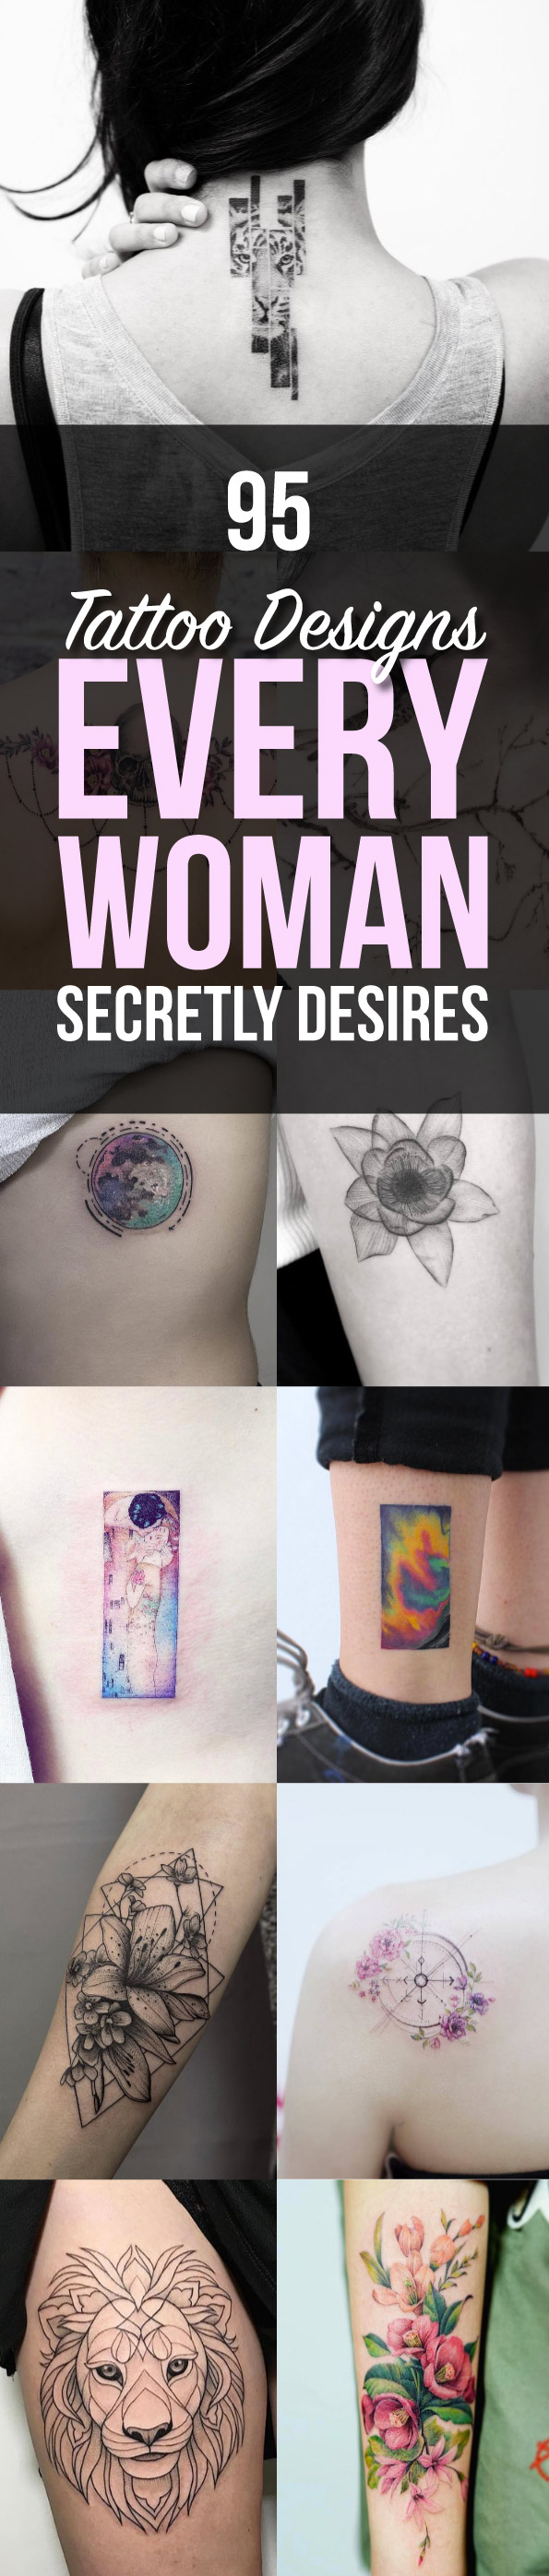 95 Tattoo Designs Every Woman Secretly Desires